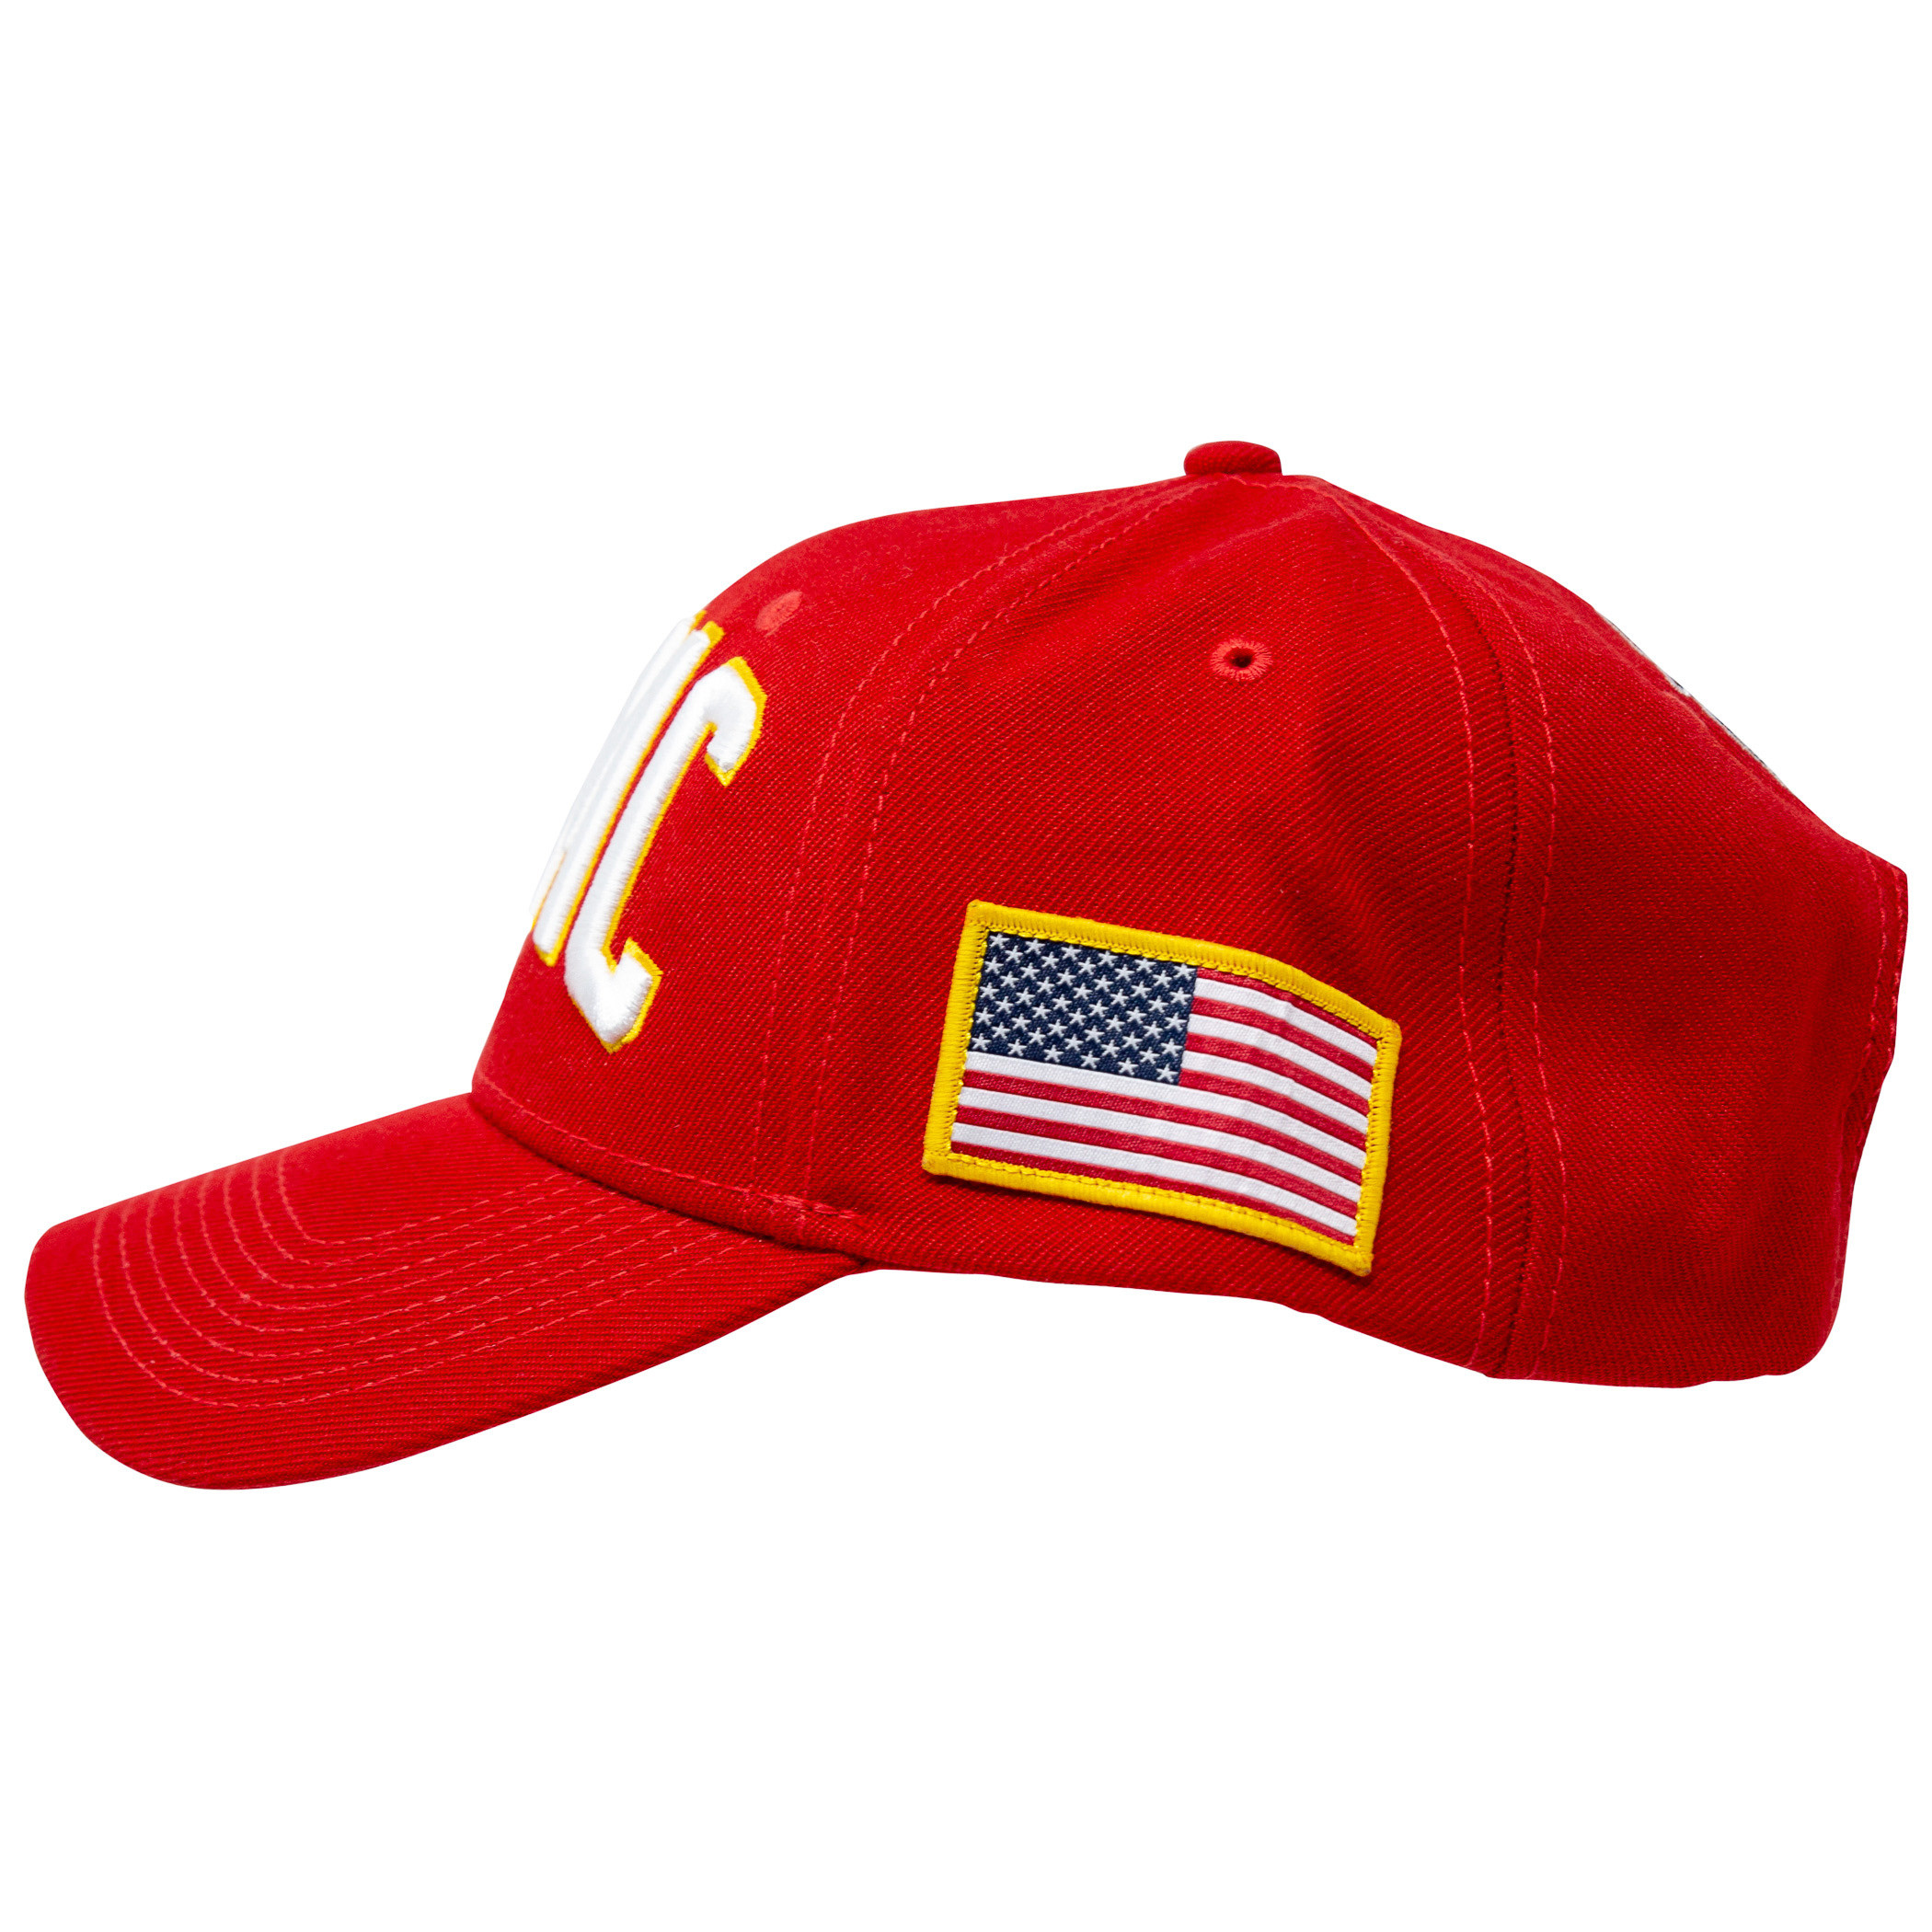 USMC Adjustable Red Snapback Hat - image 3 of 5